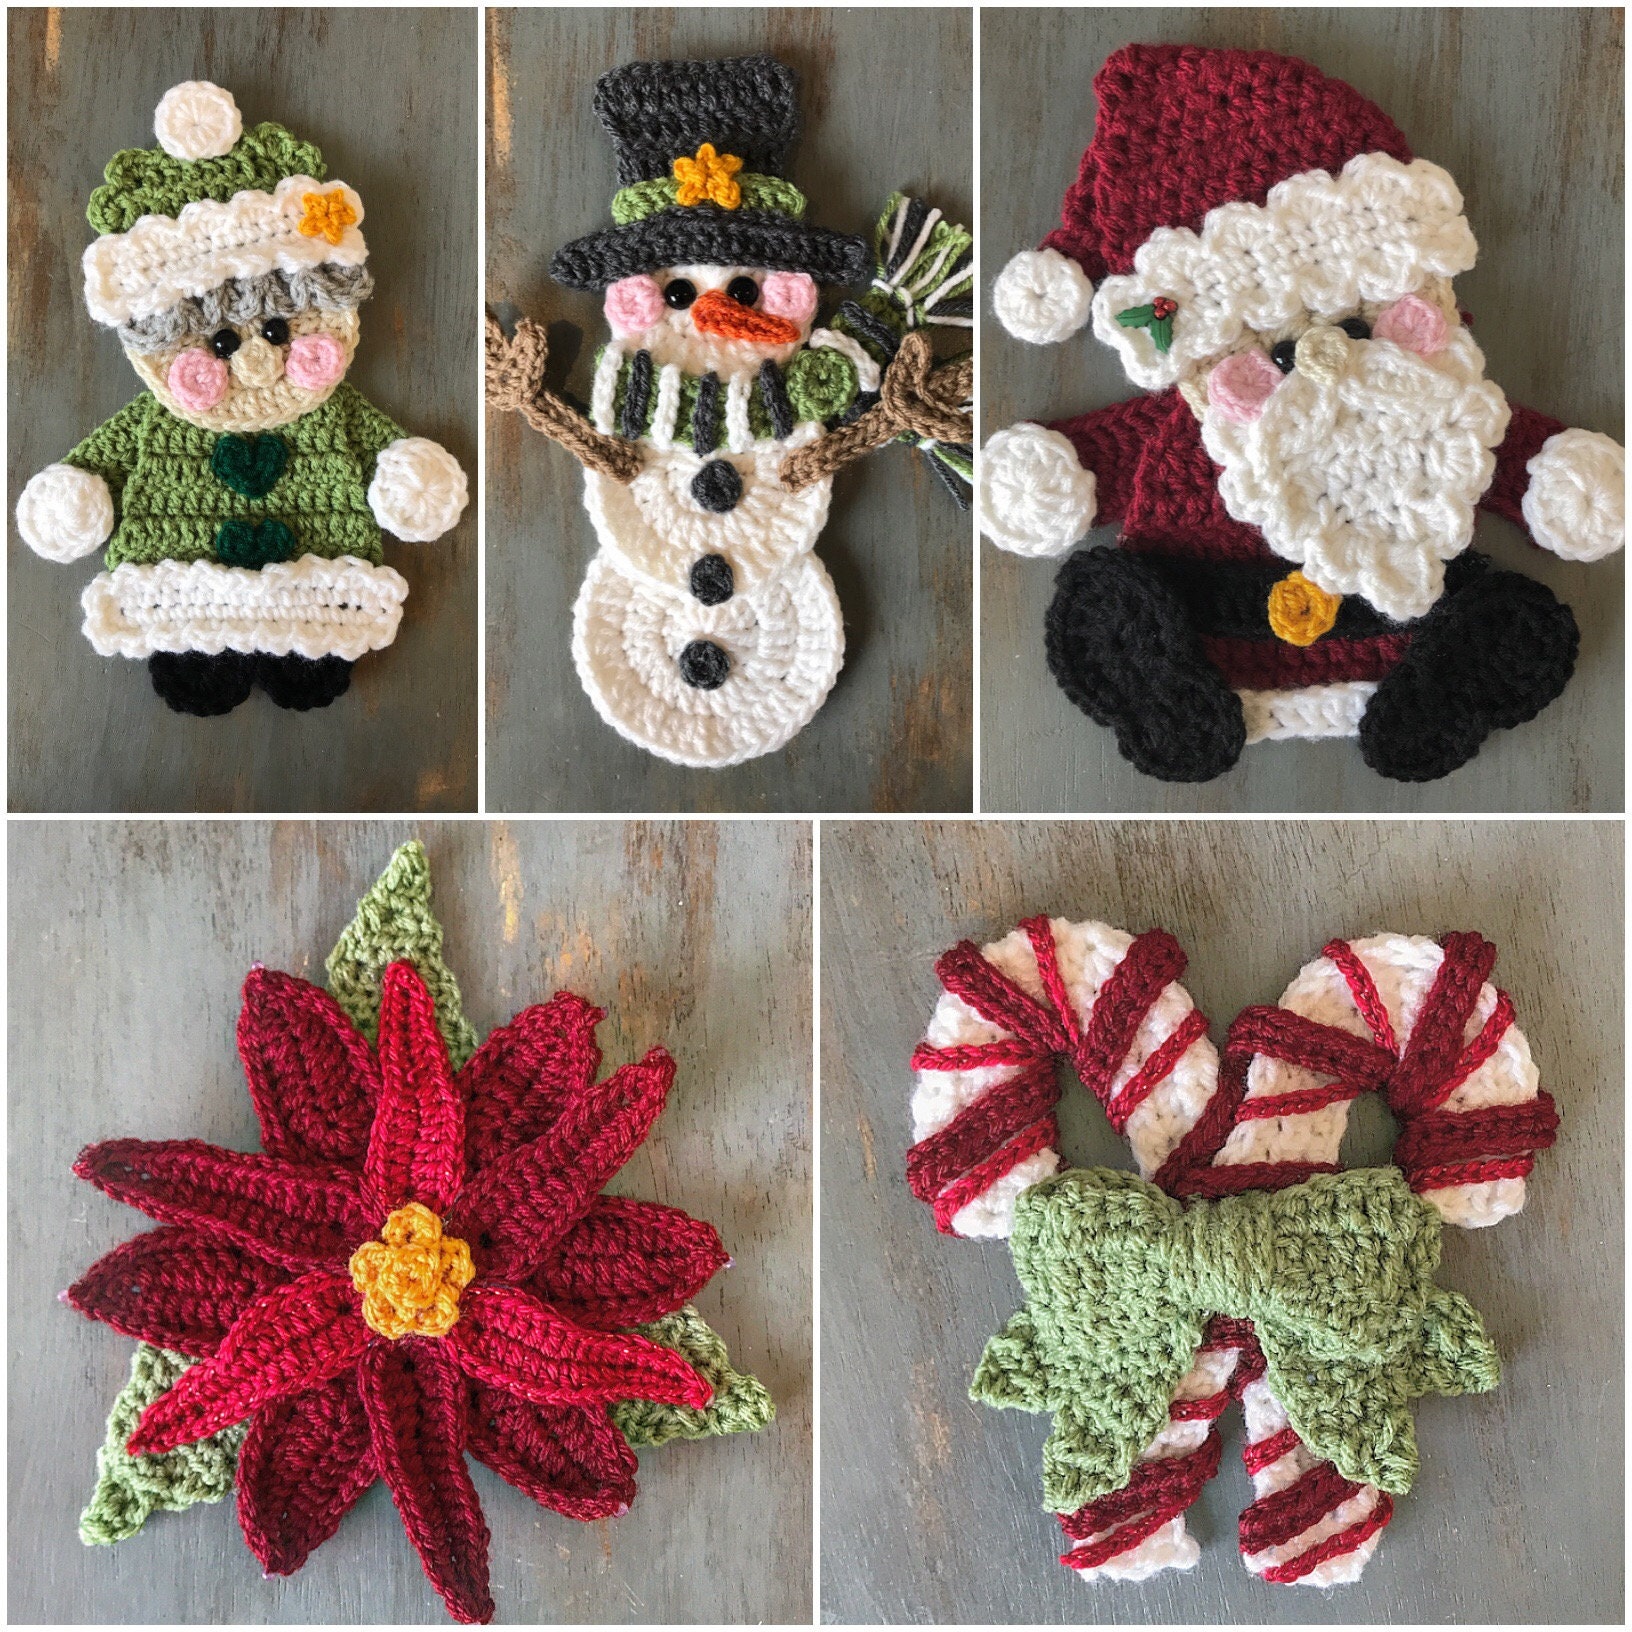 crochet-pattern-instant-pdf-dowload-christmas-patterns-crochet